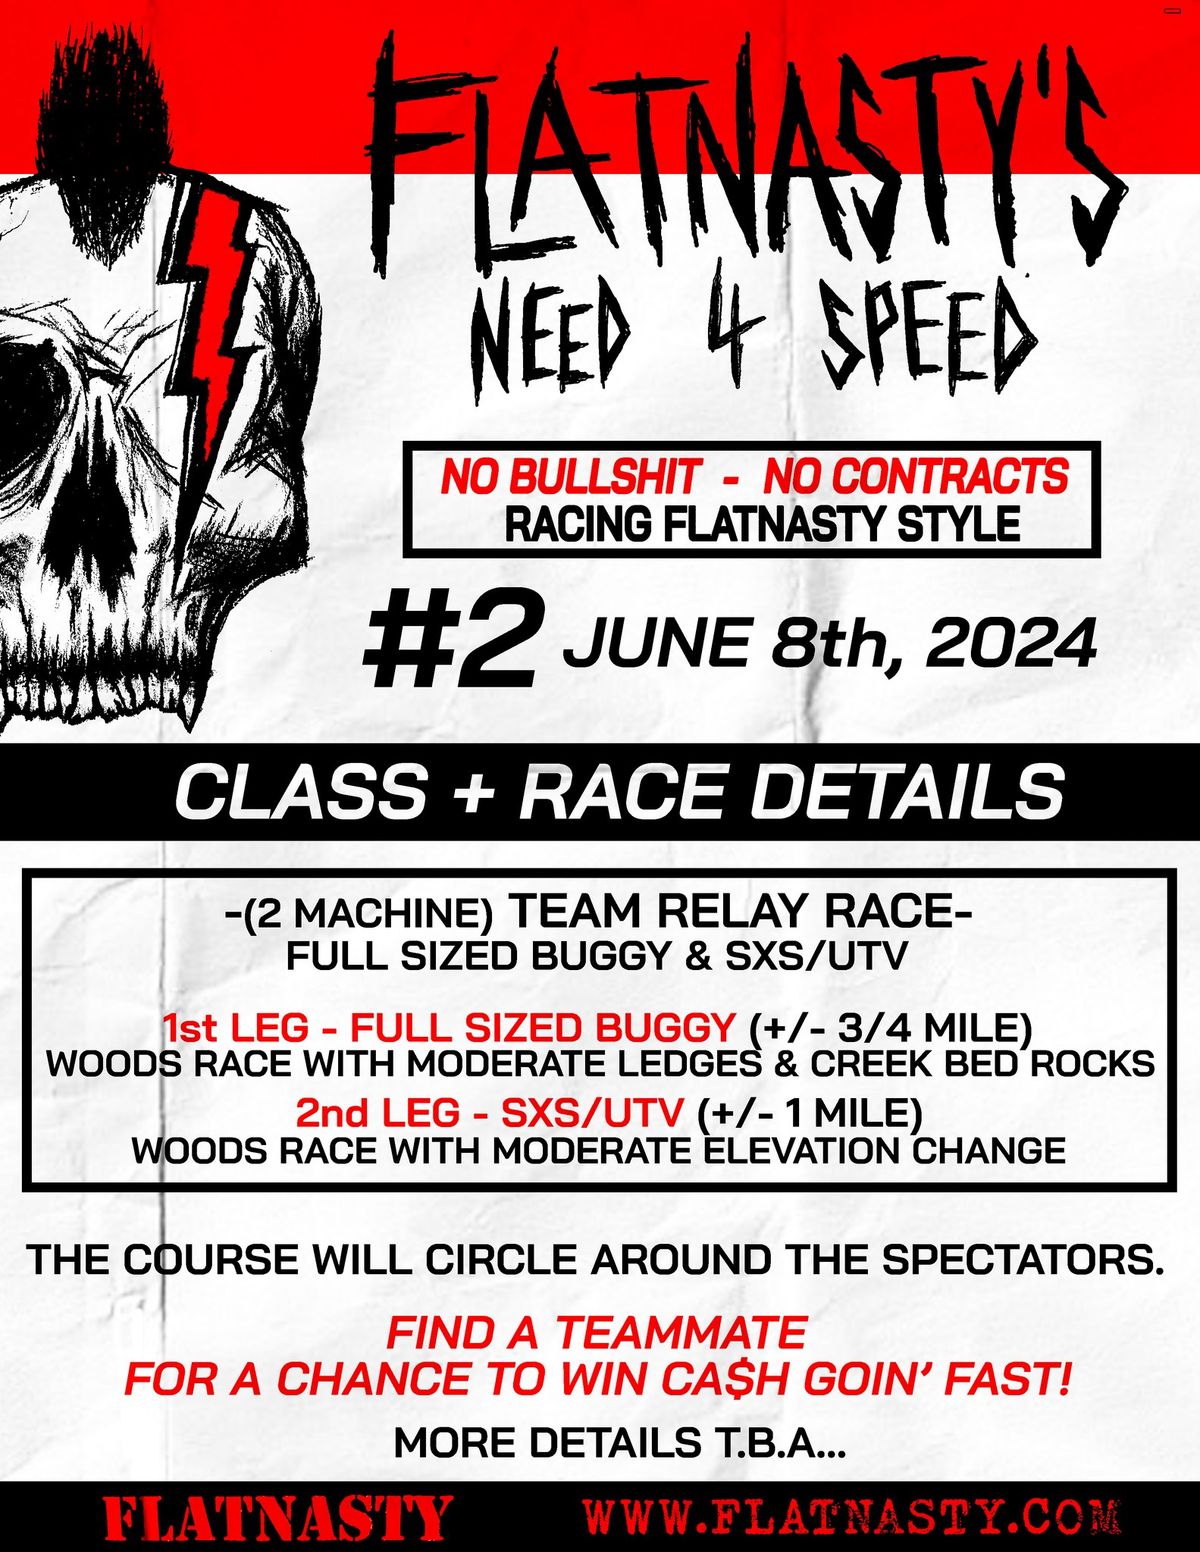 FLATNASTY'S NEED 4 SPEED - RACE #2